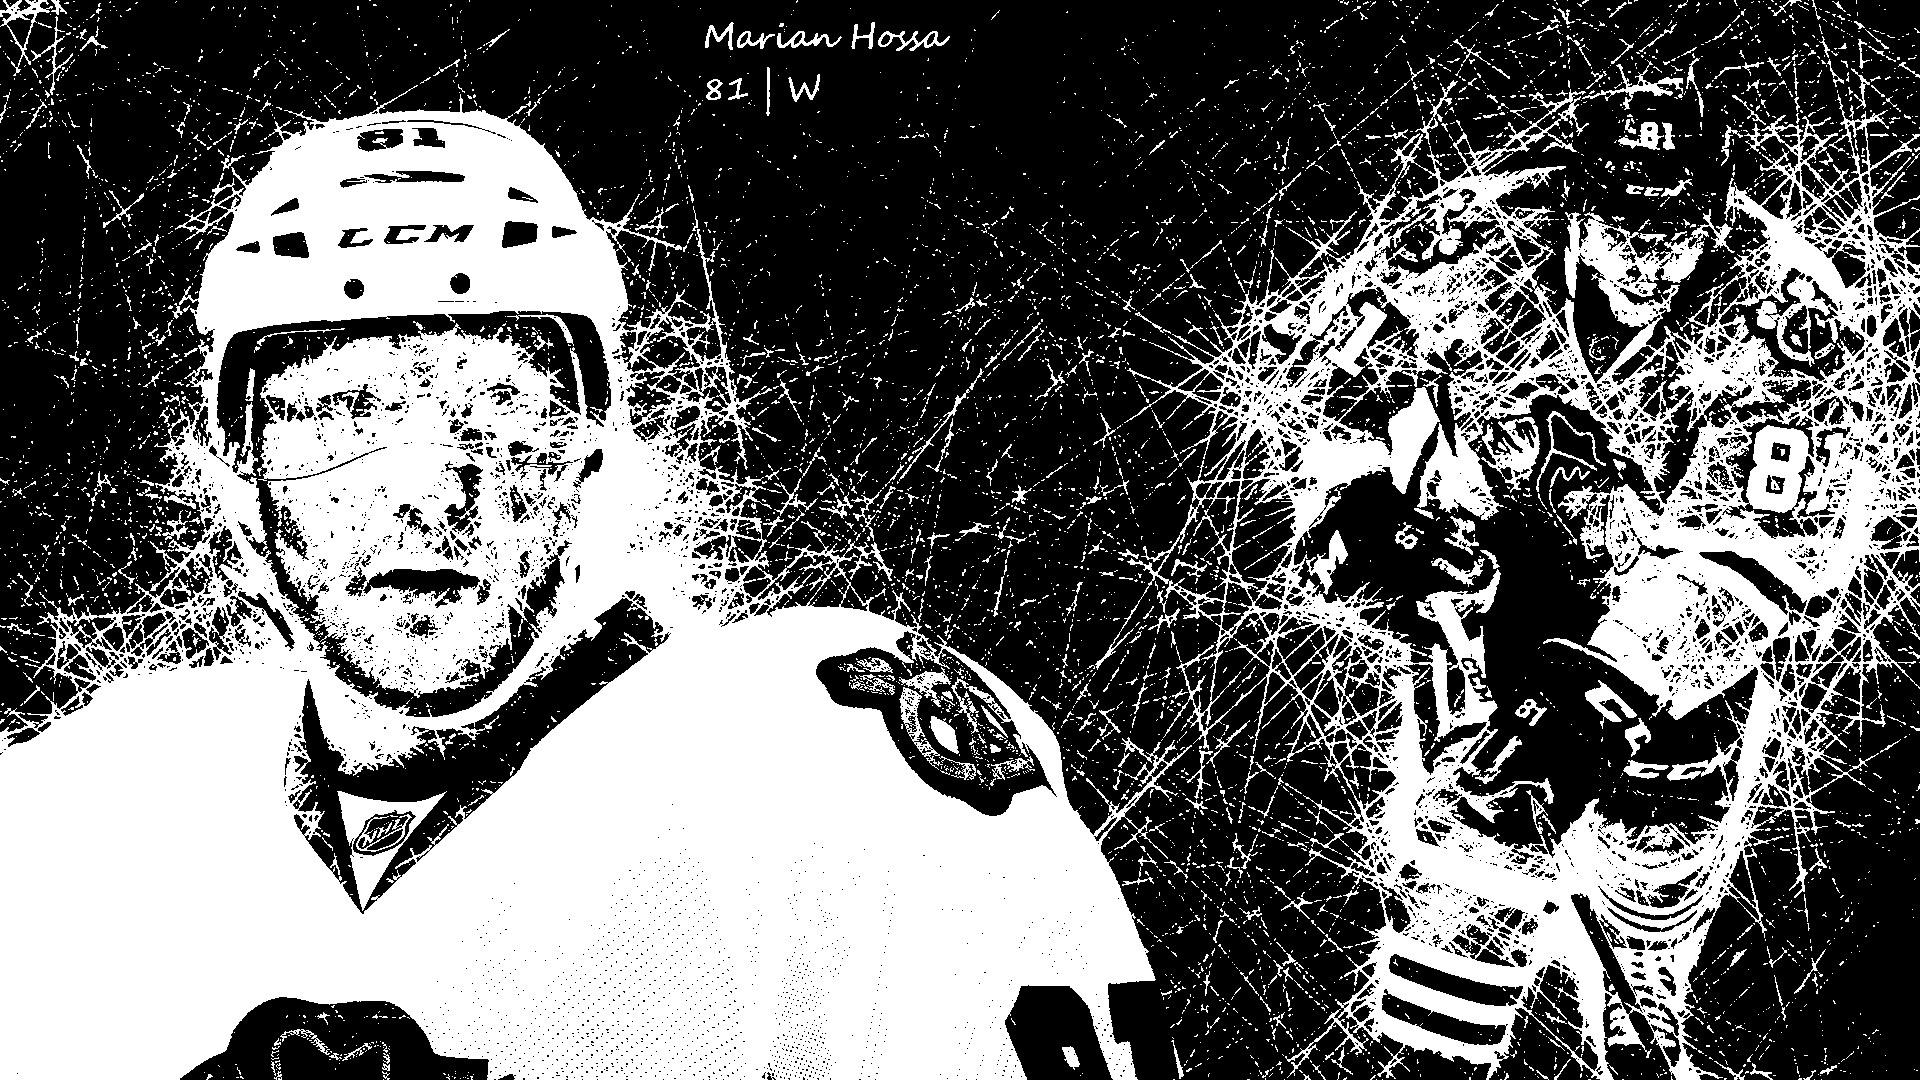 Best Hockey Player Marian Hossa Wallpaper And Image